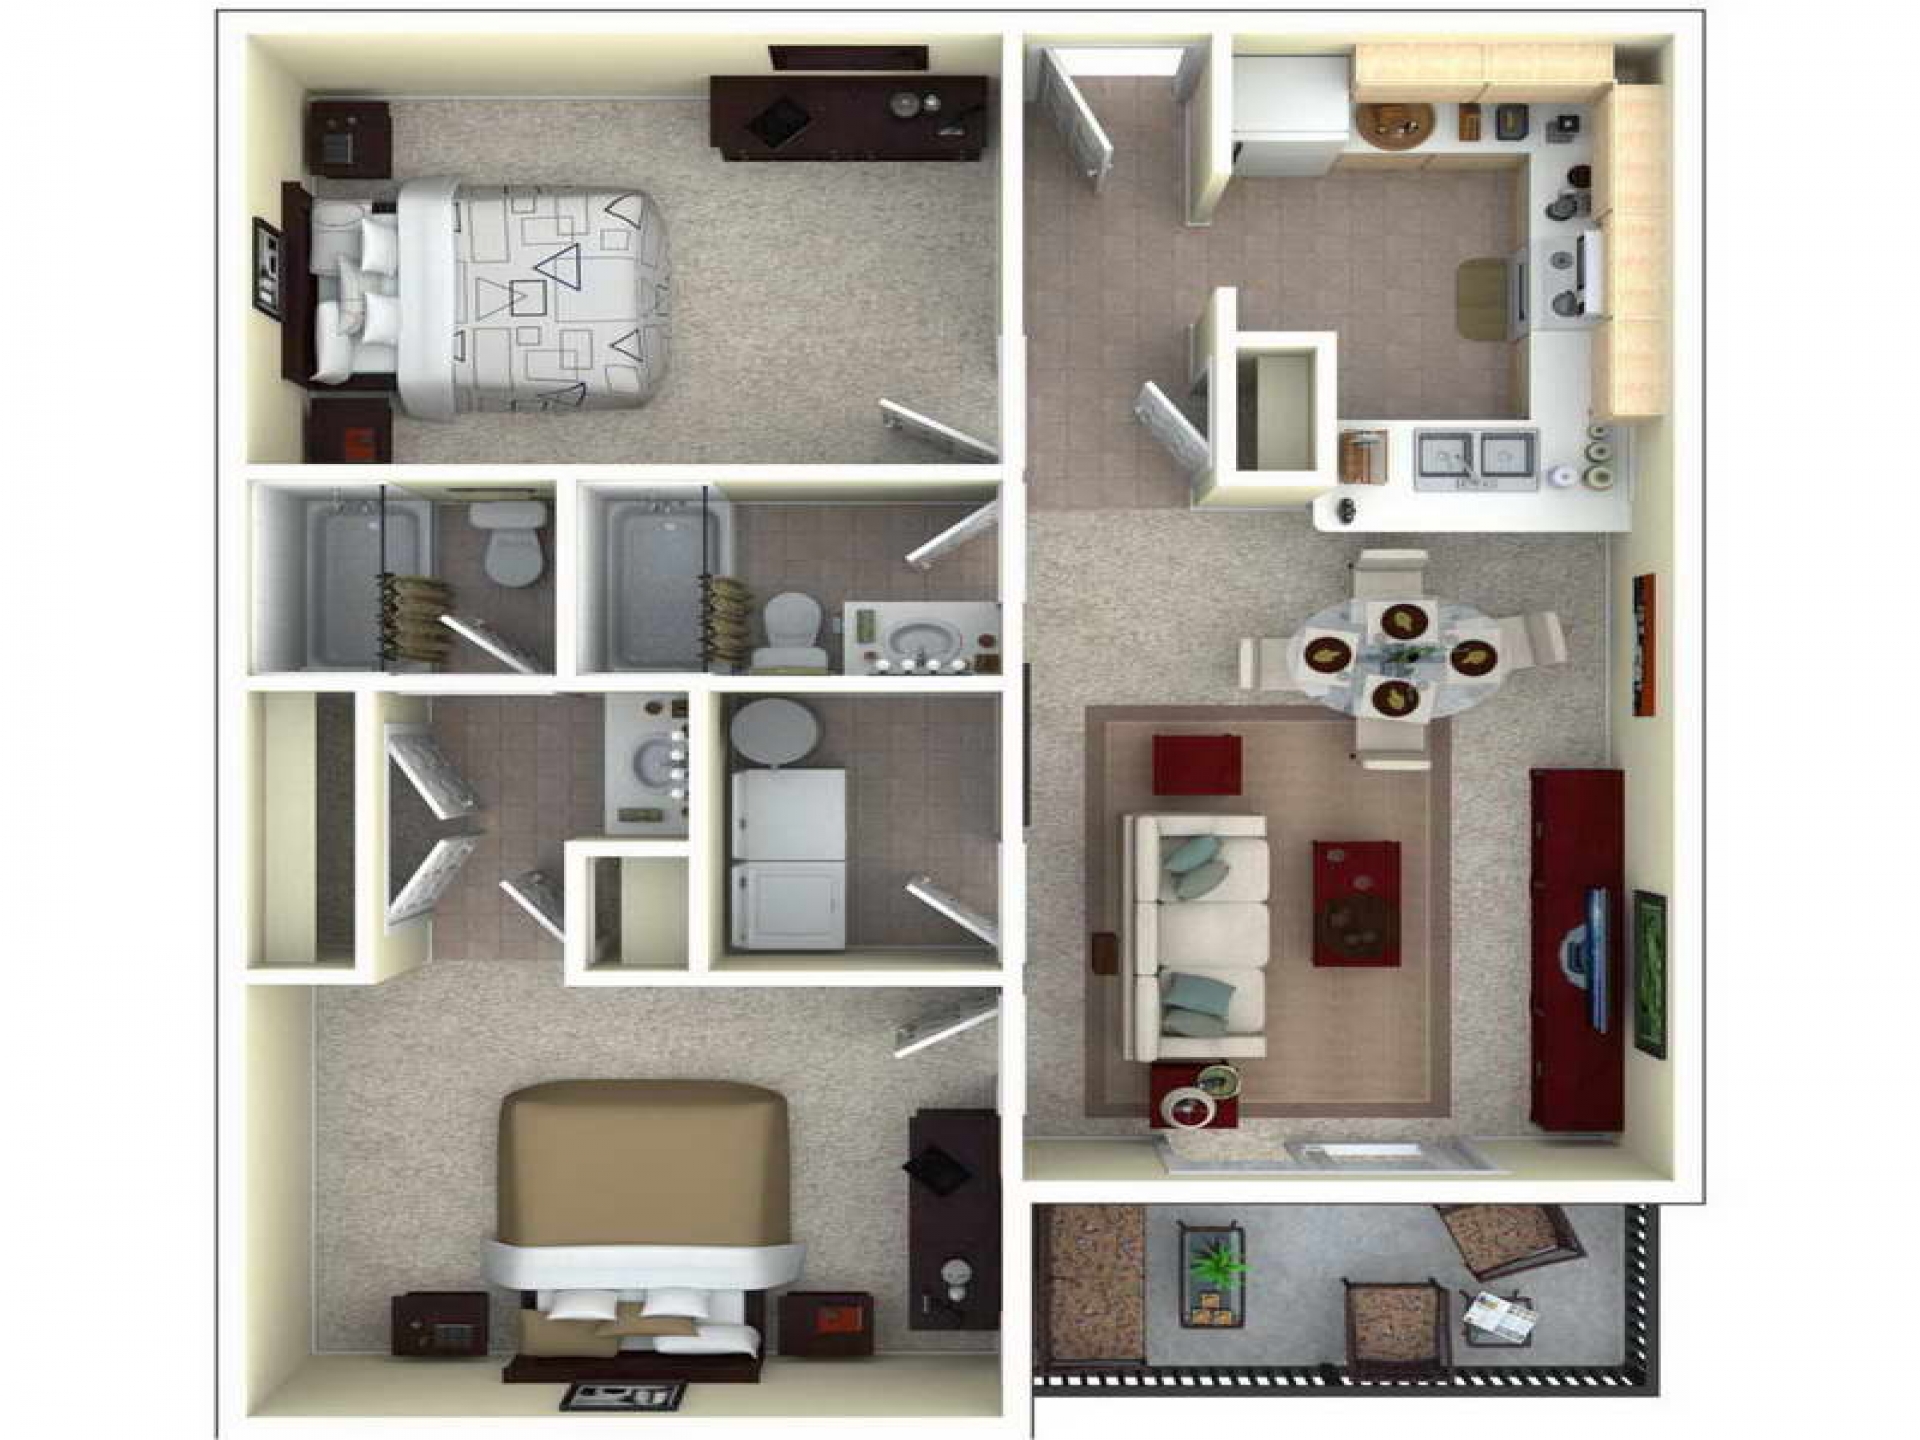 Design your 3d room online free » Картинки и фотографии дизайна квартир